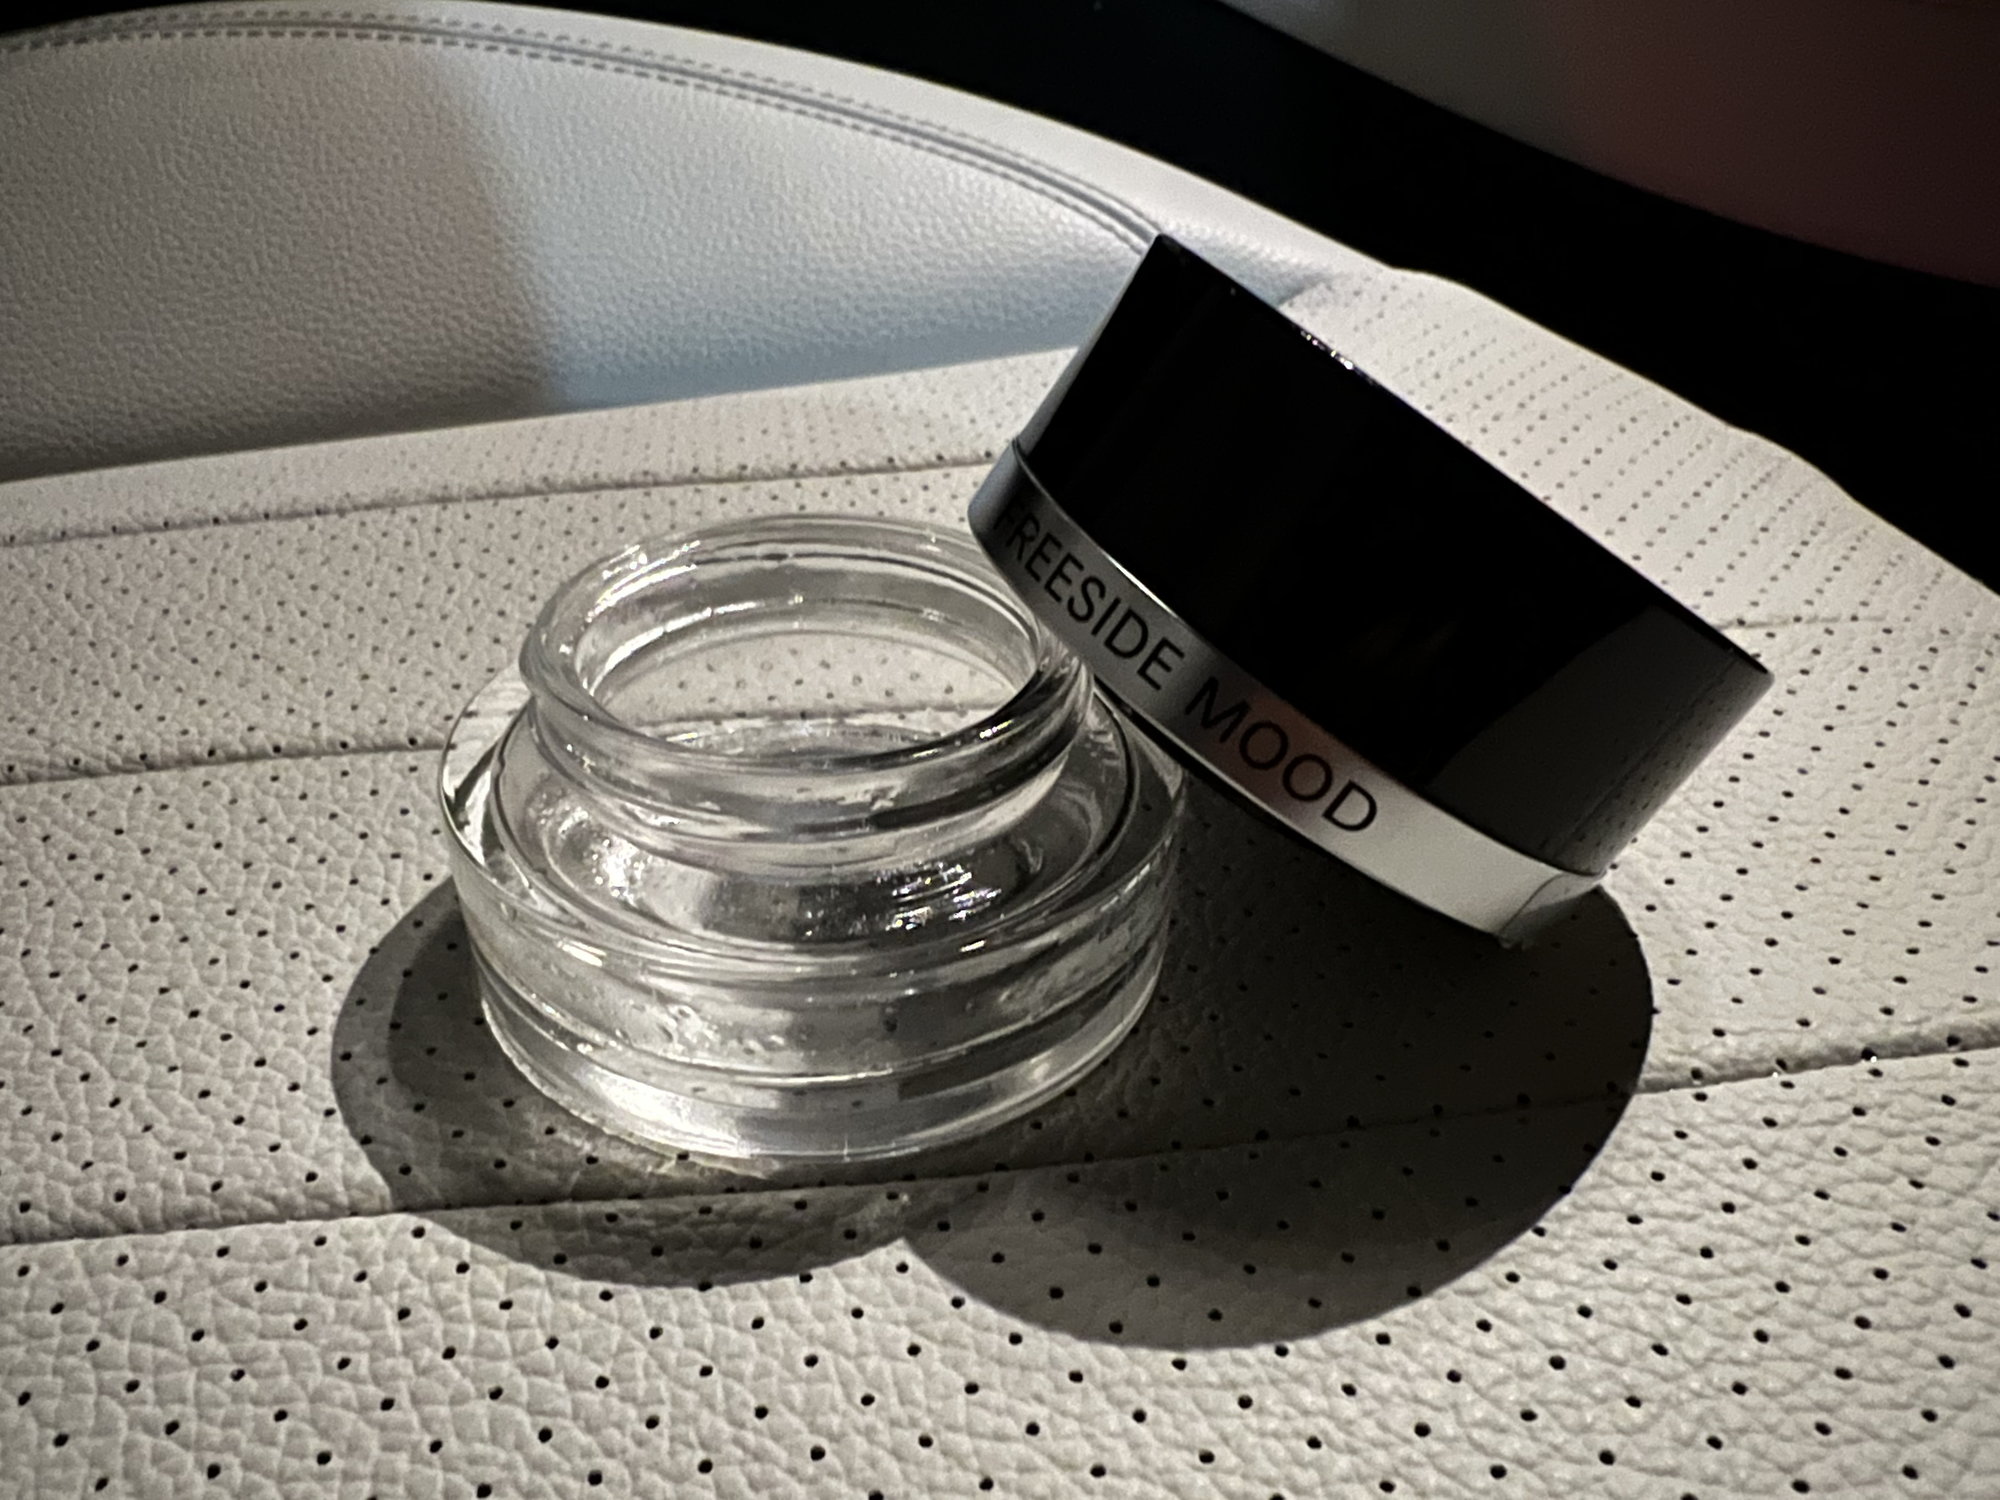 Parfum Flacon diffuseur SPORTS MOOD Mercedes-Benz